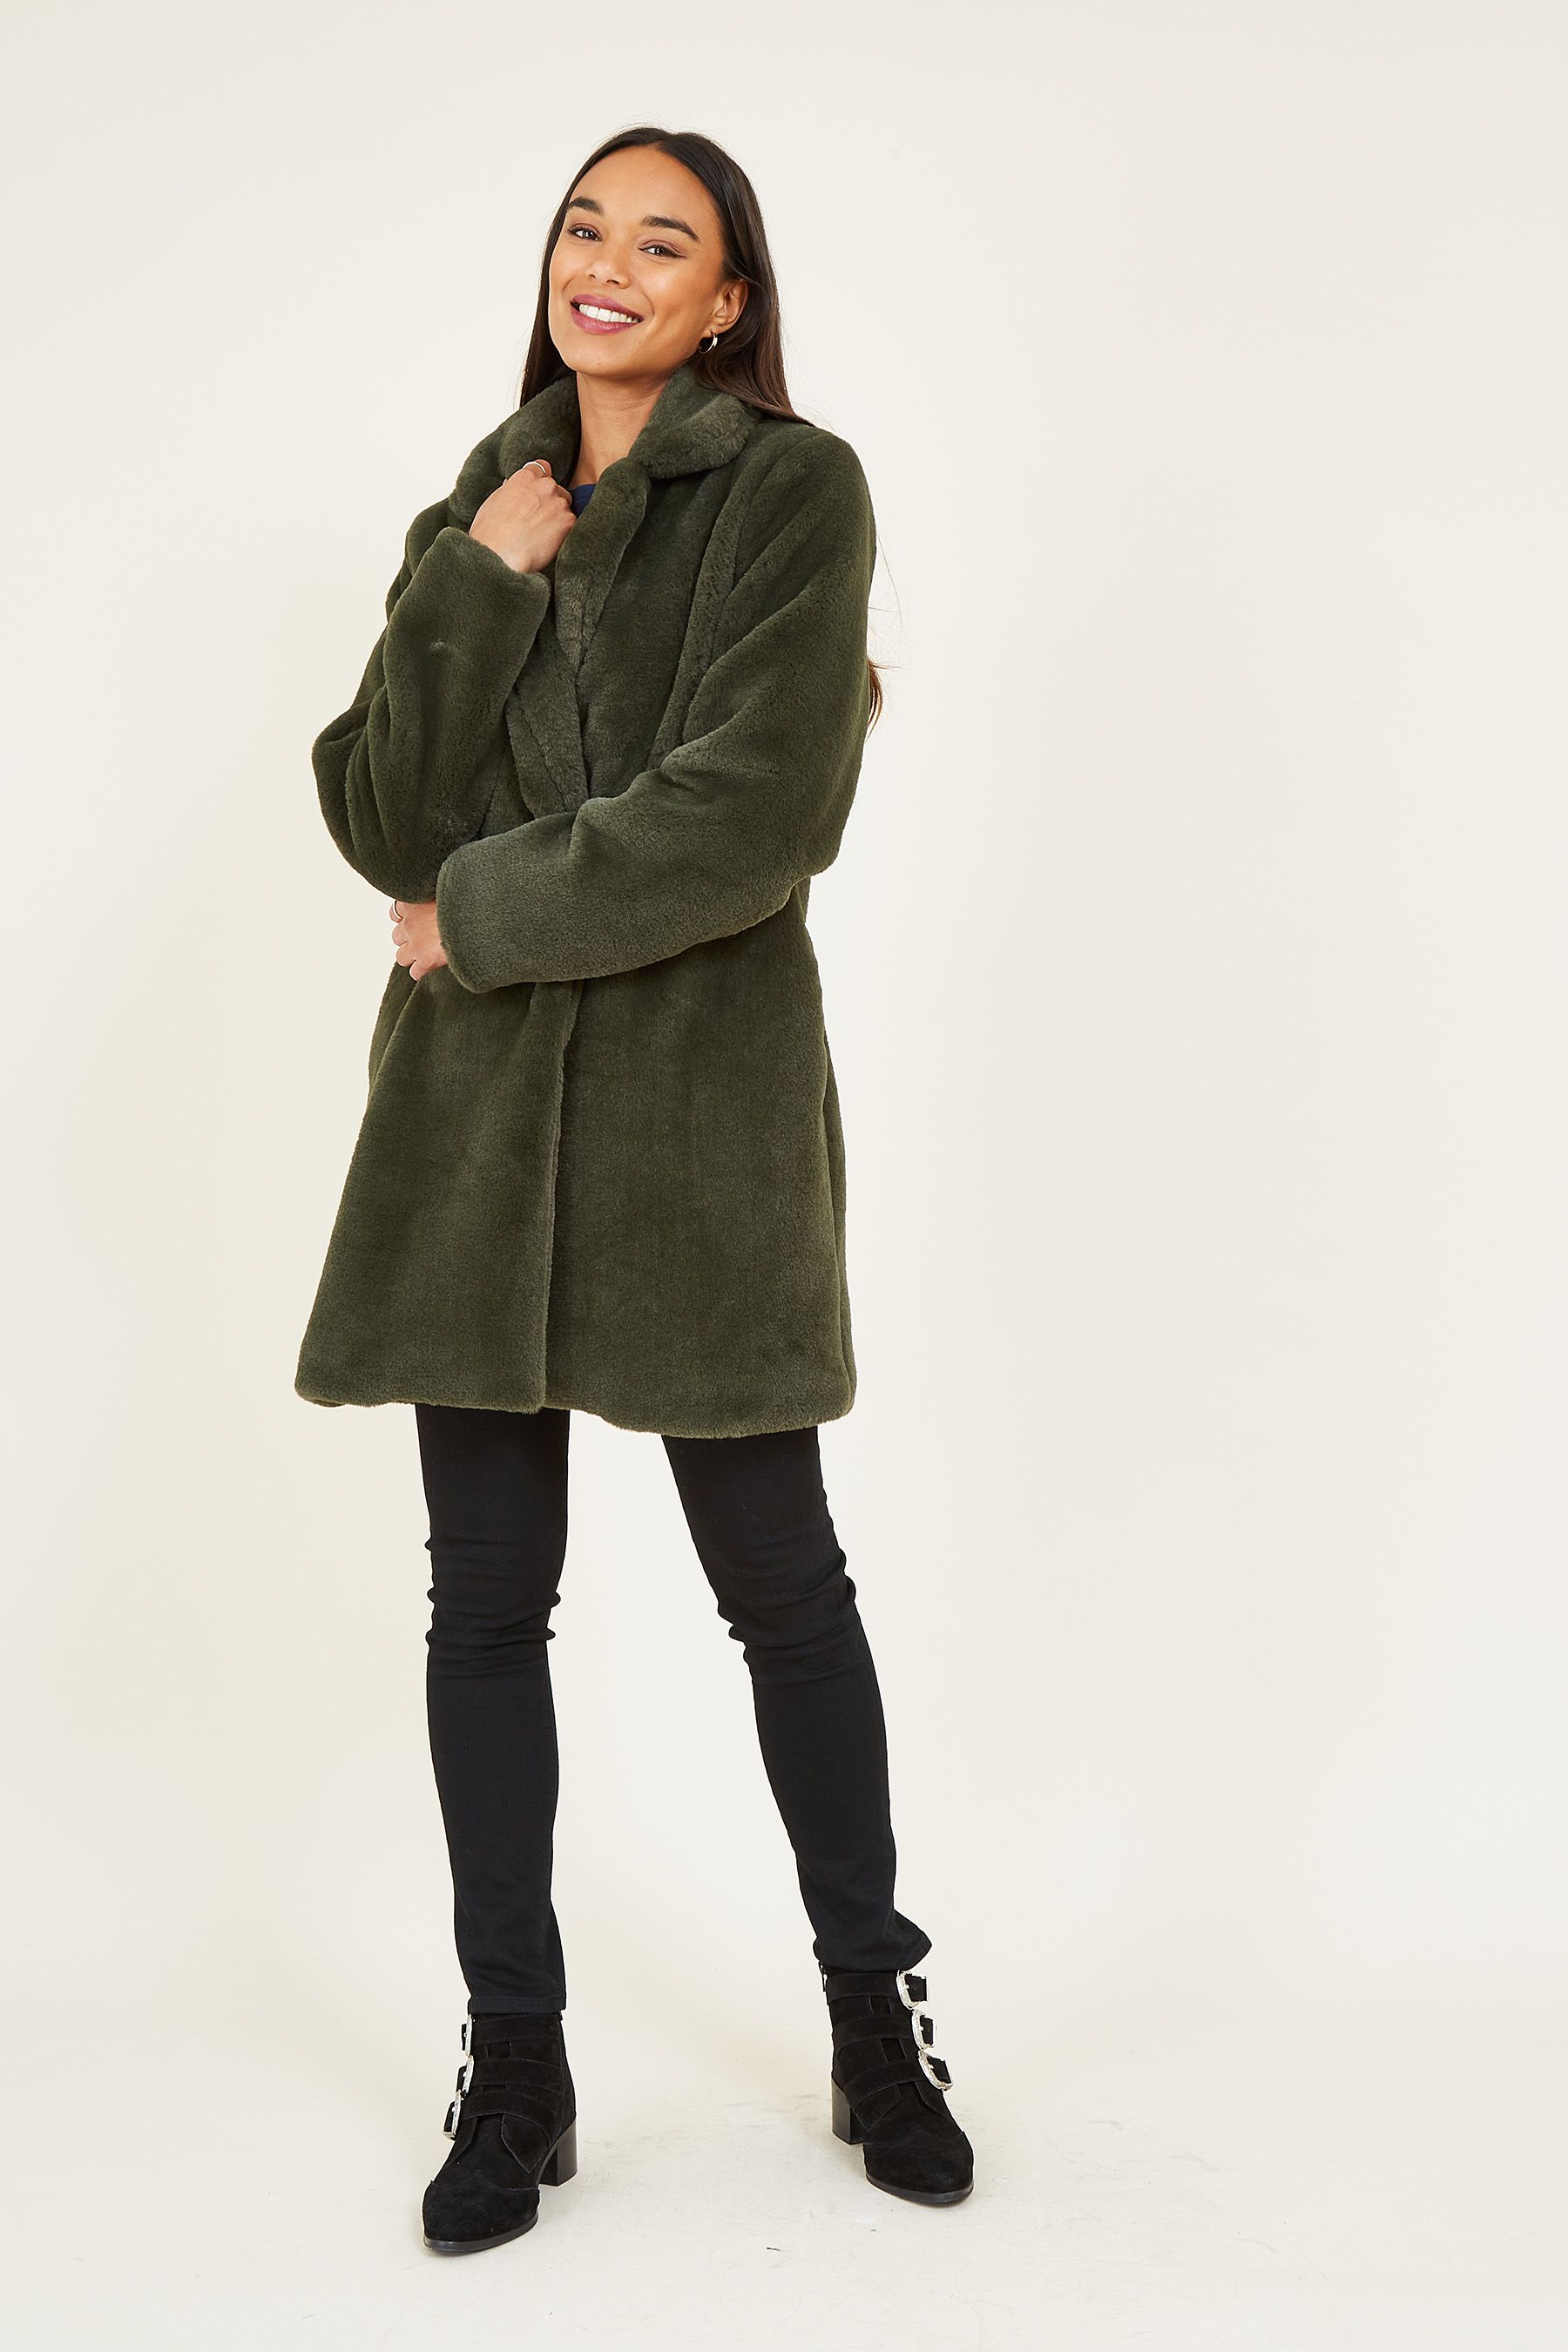 Buy Yumi Green Faux Fur Coat from the Next UK online shop